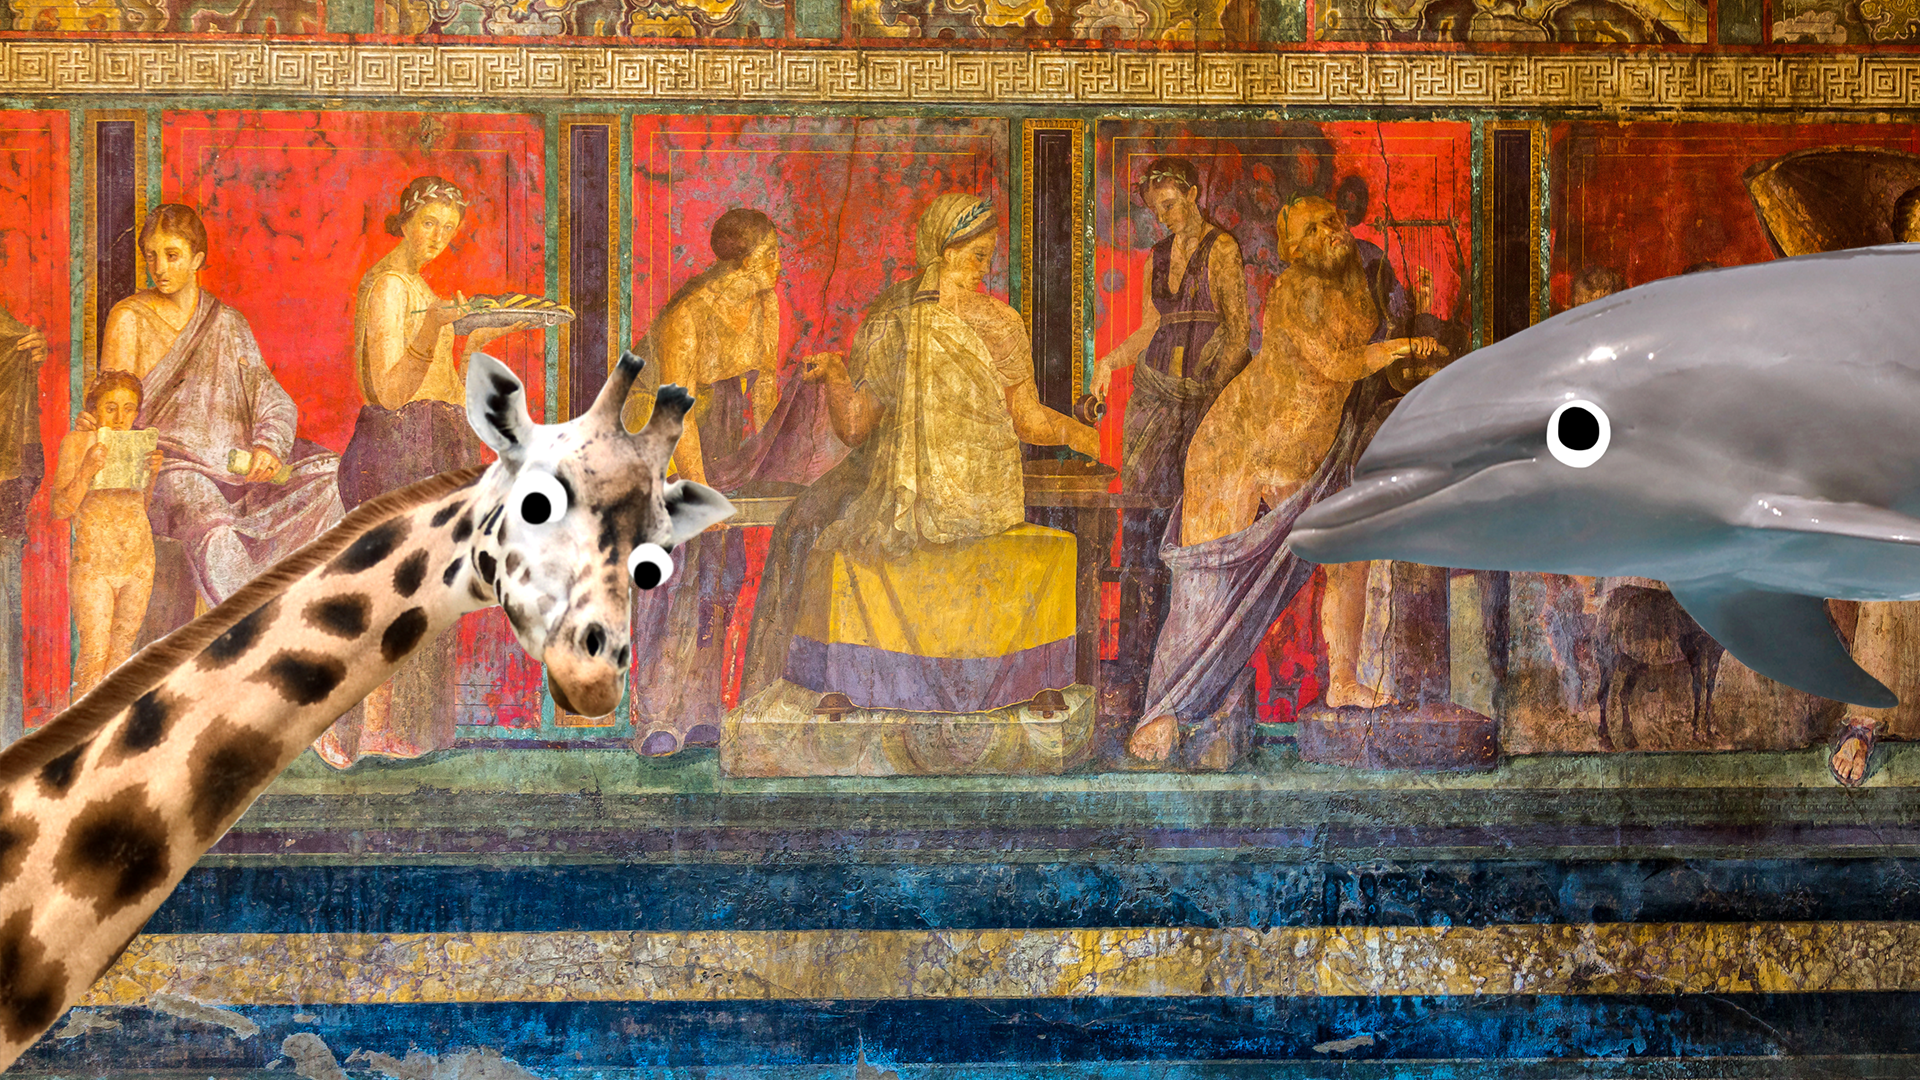 Roman fresco with Beano giraffe and dolphin